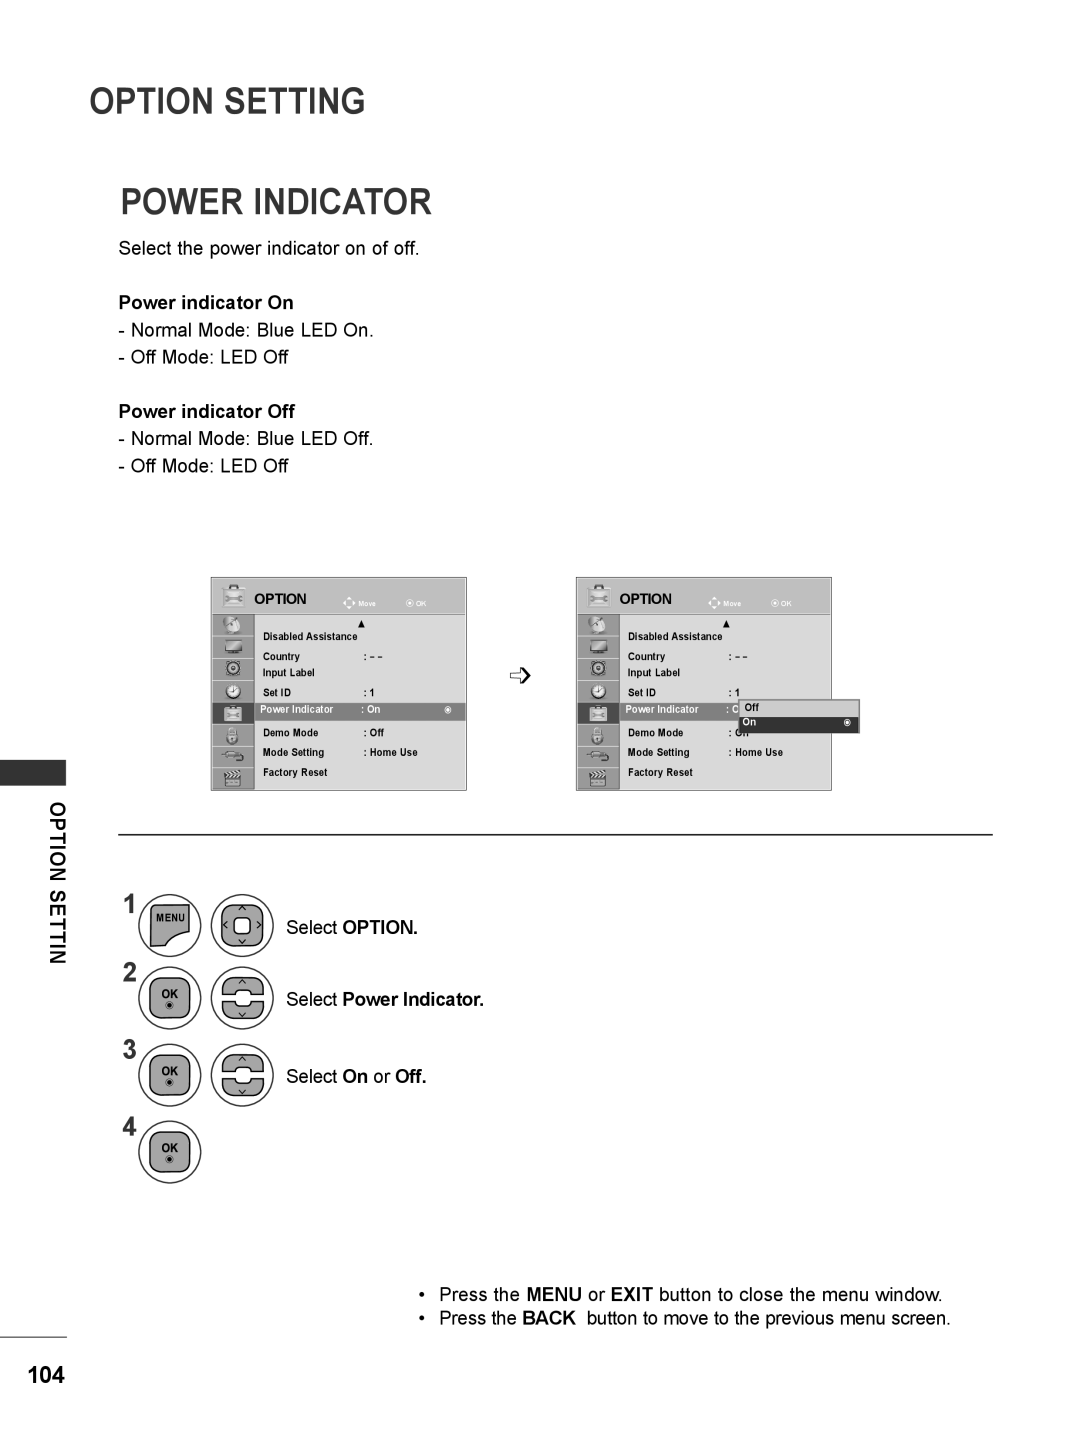 LG Electronics M2080DN Option Setting Power Indicator, Power indicator On, Power indicator Off, Select Power Indicator 